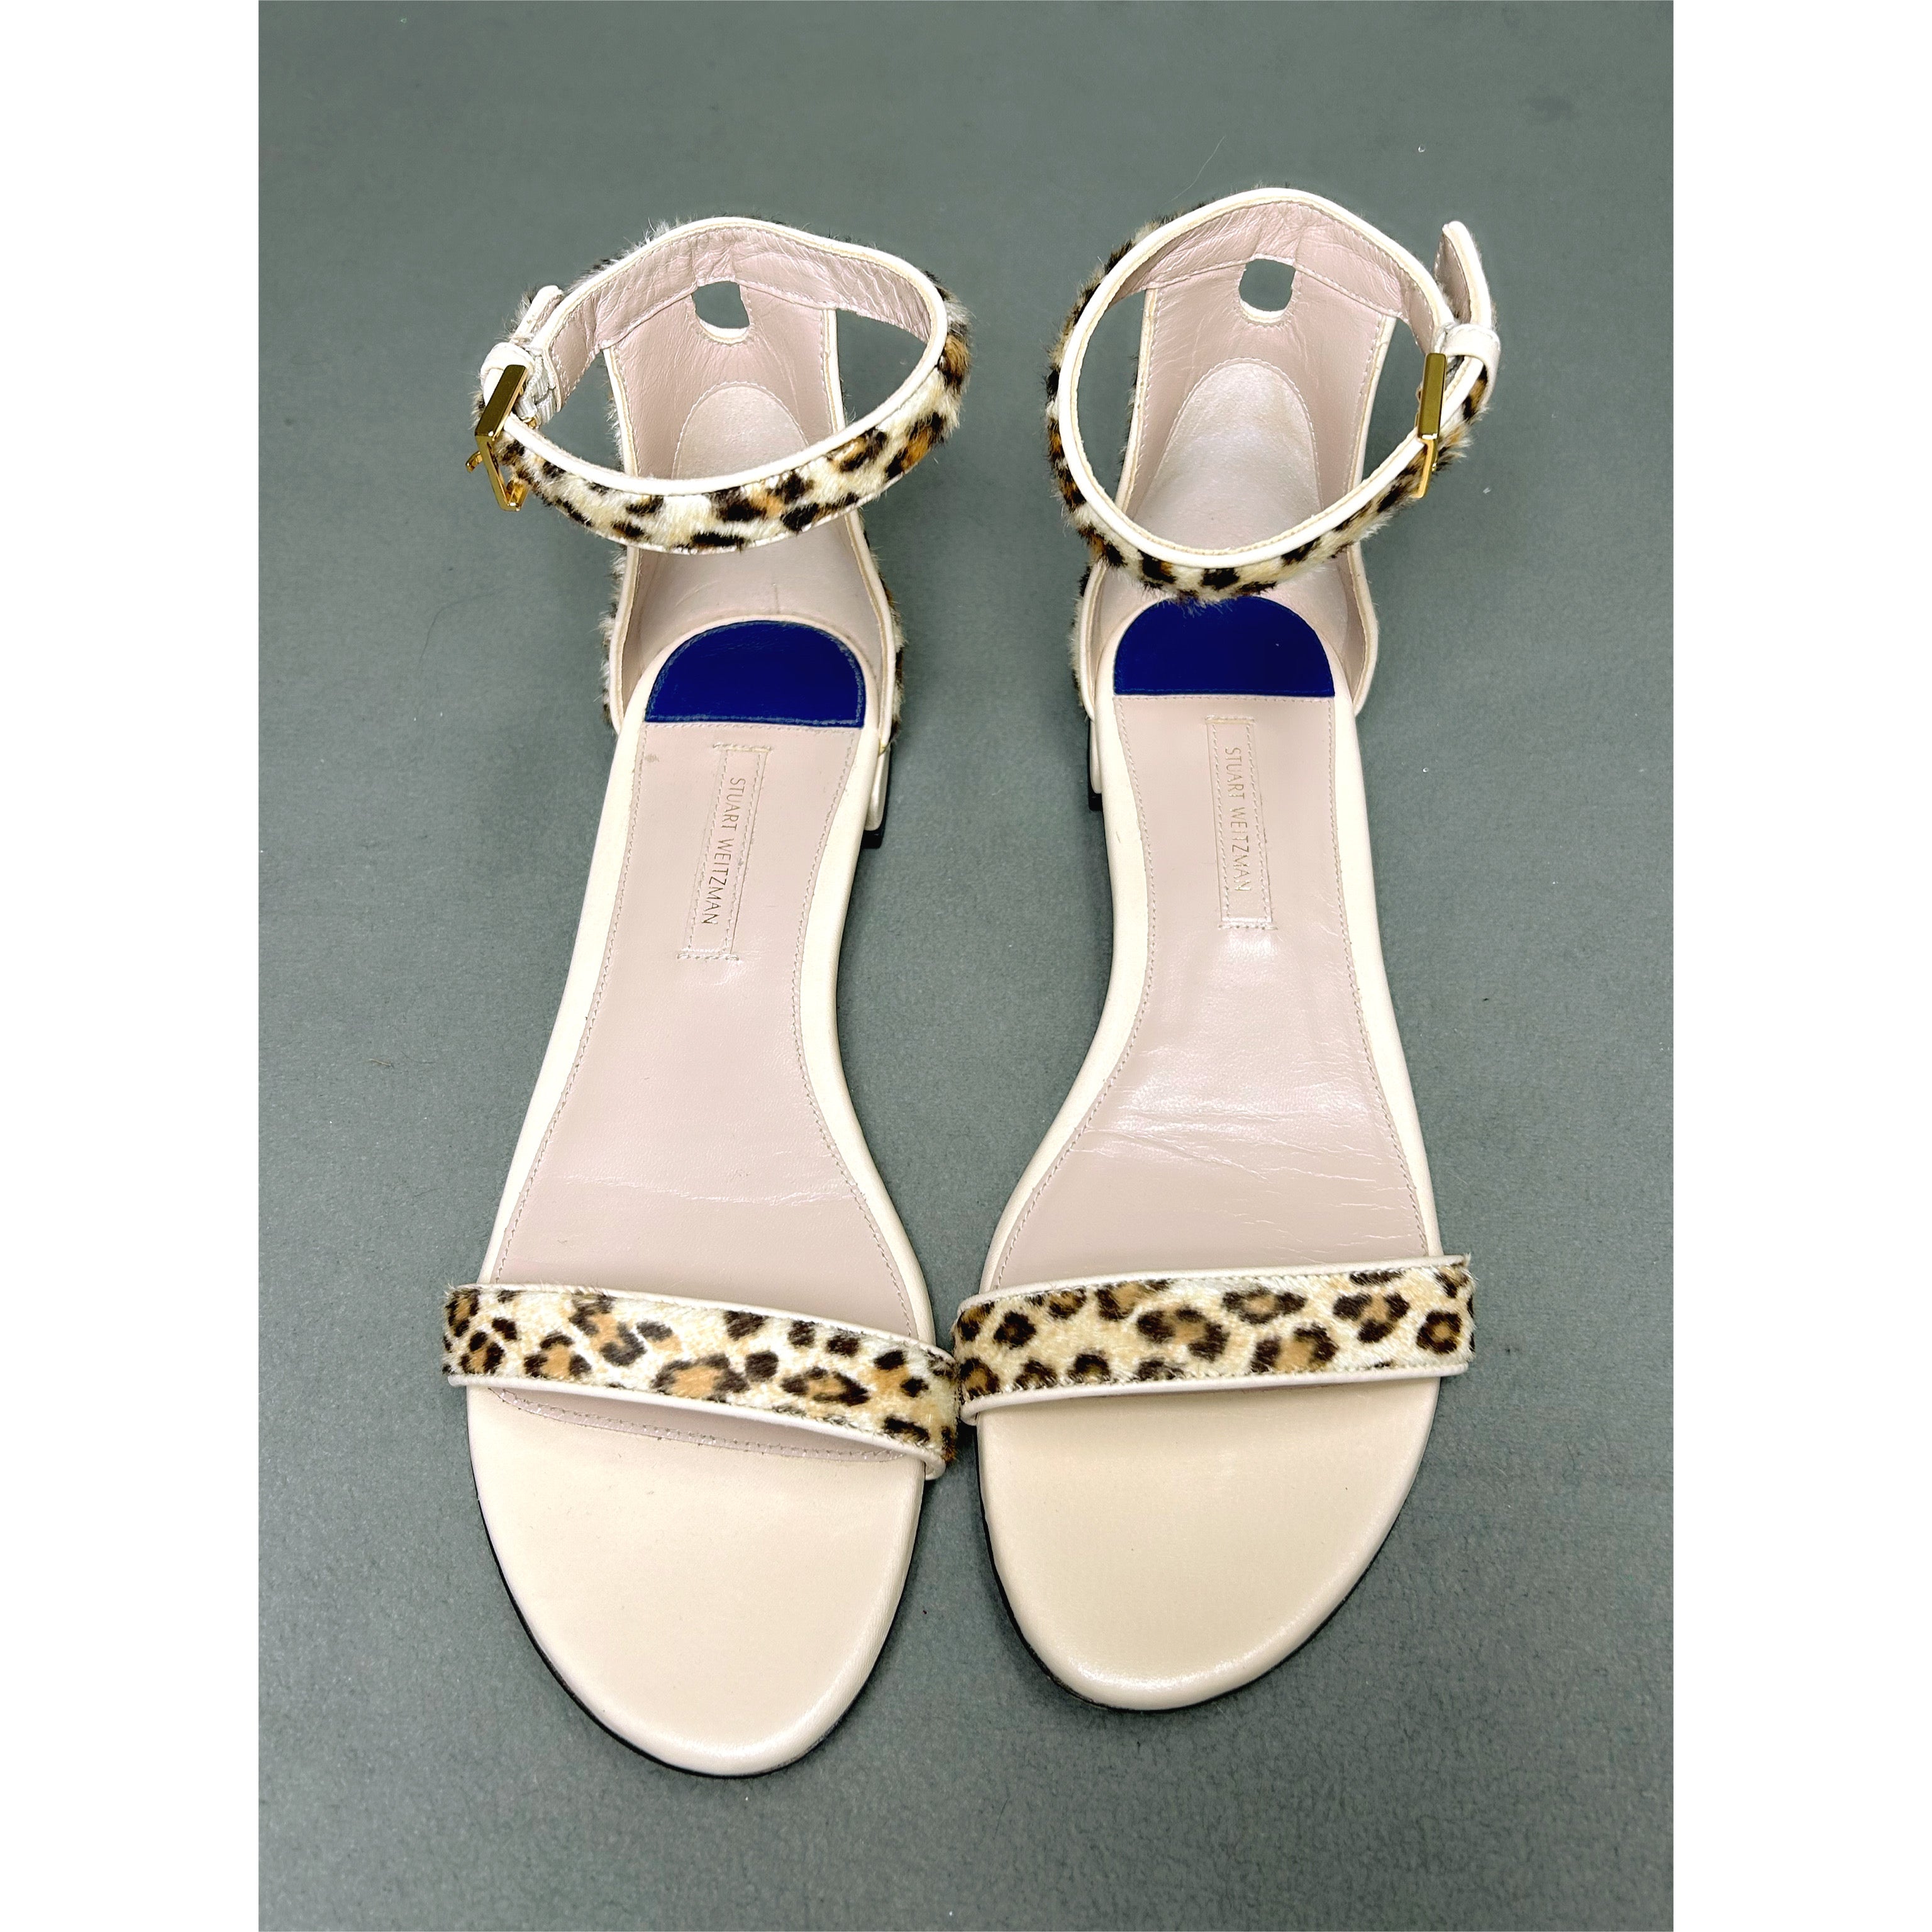 Stuart Weitzman leopard sandals, size 9